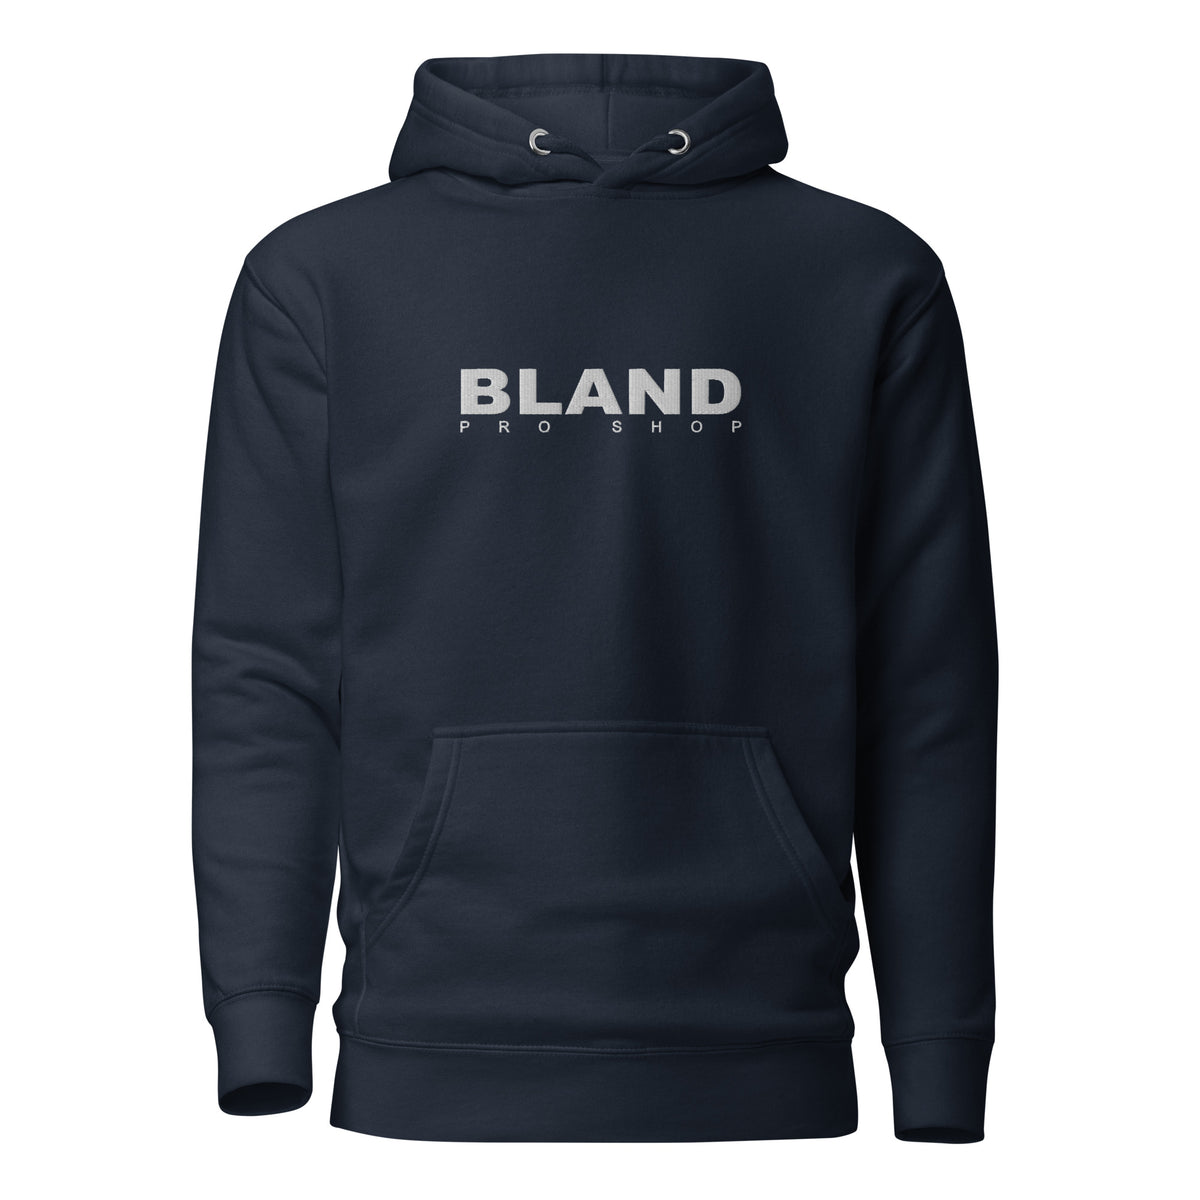 Bland Pro Shop Logo Hoodie